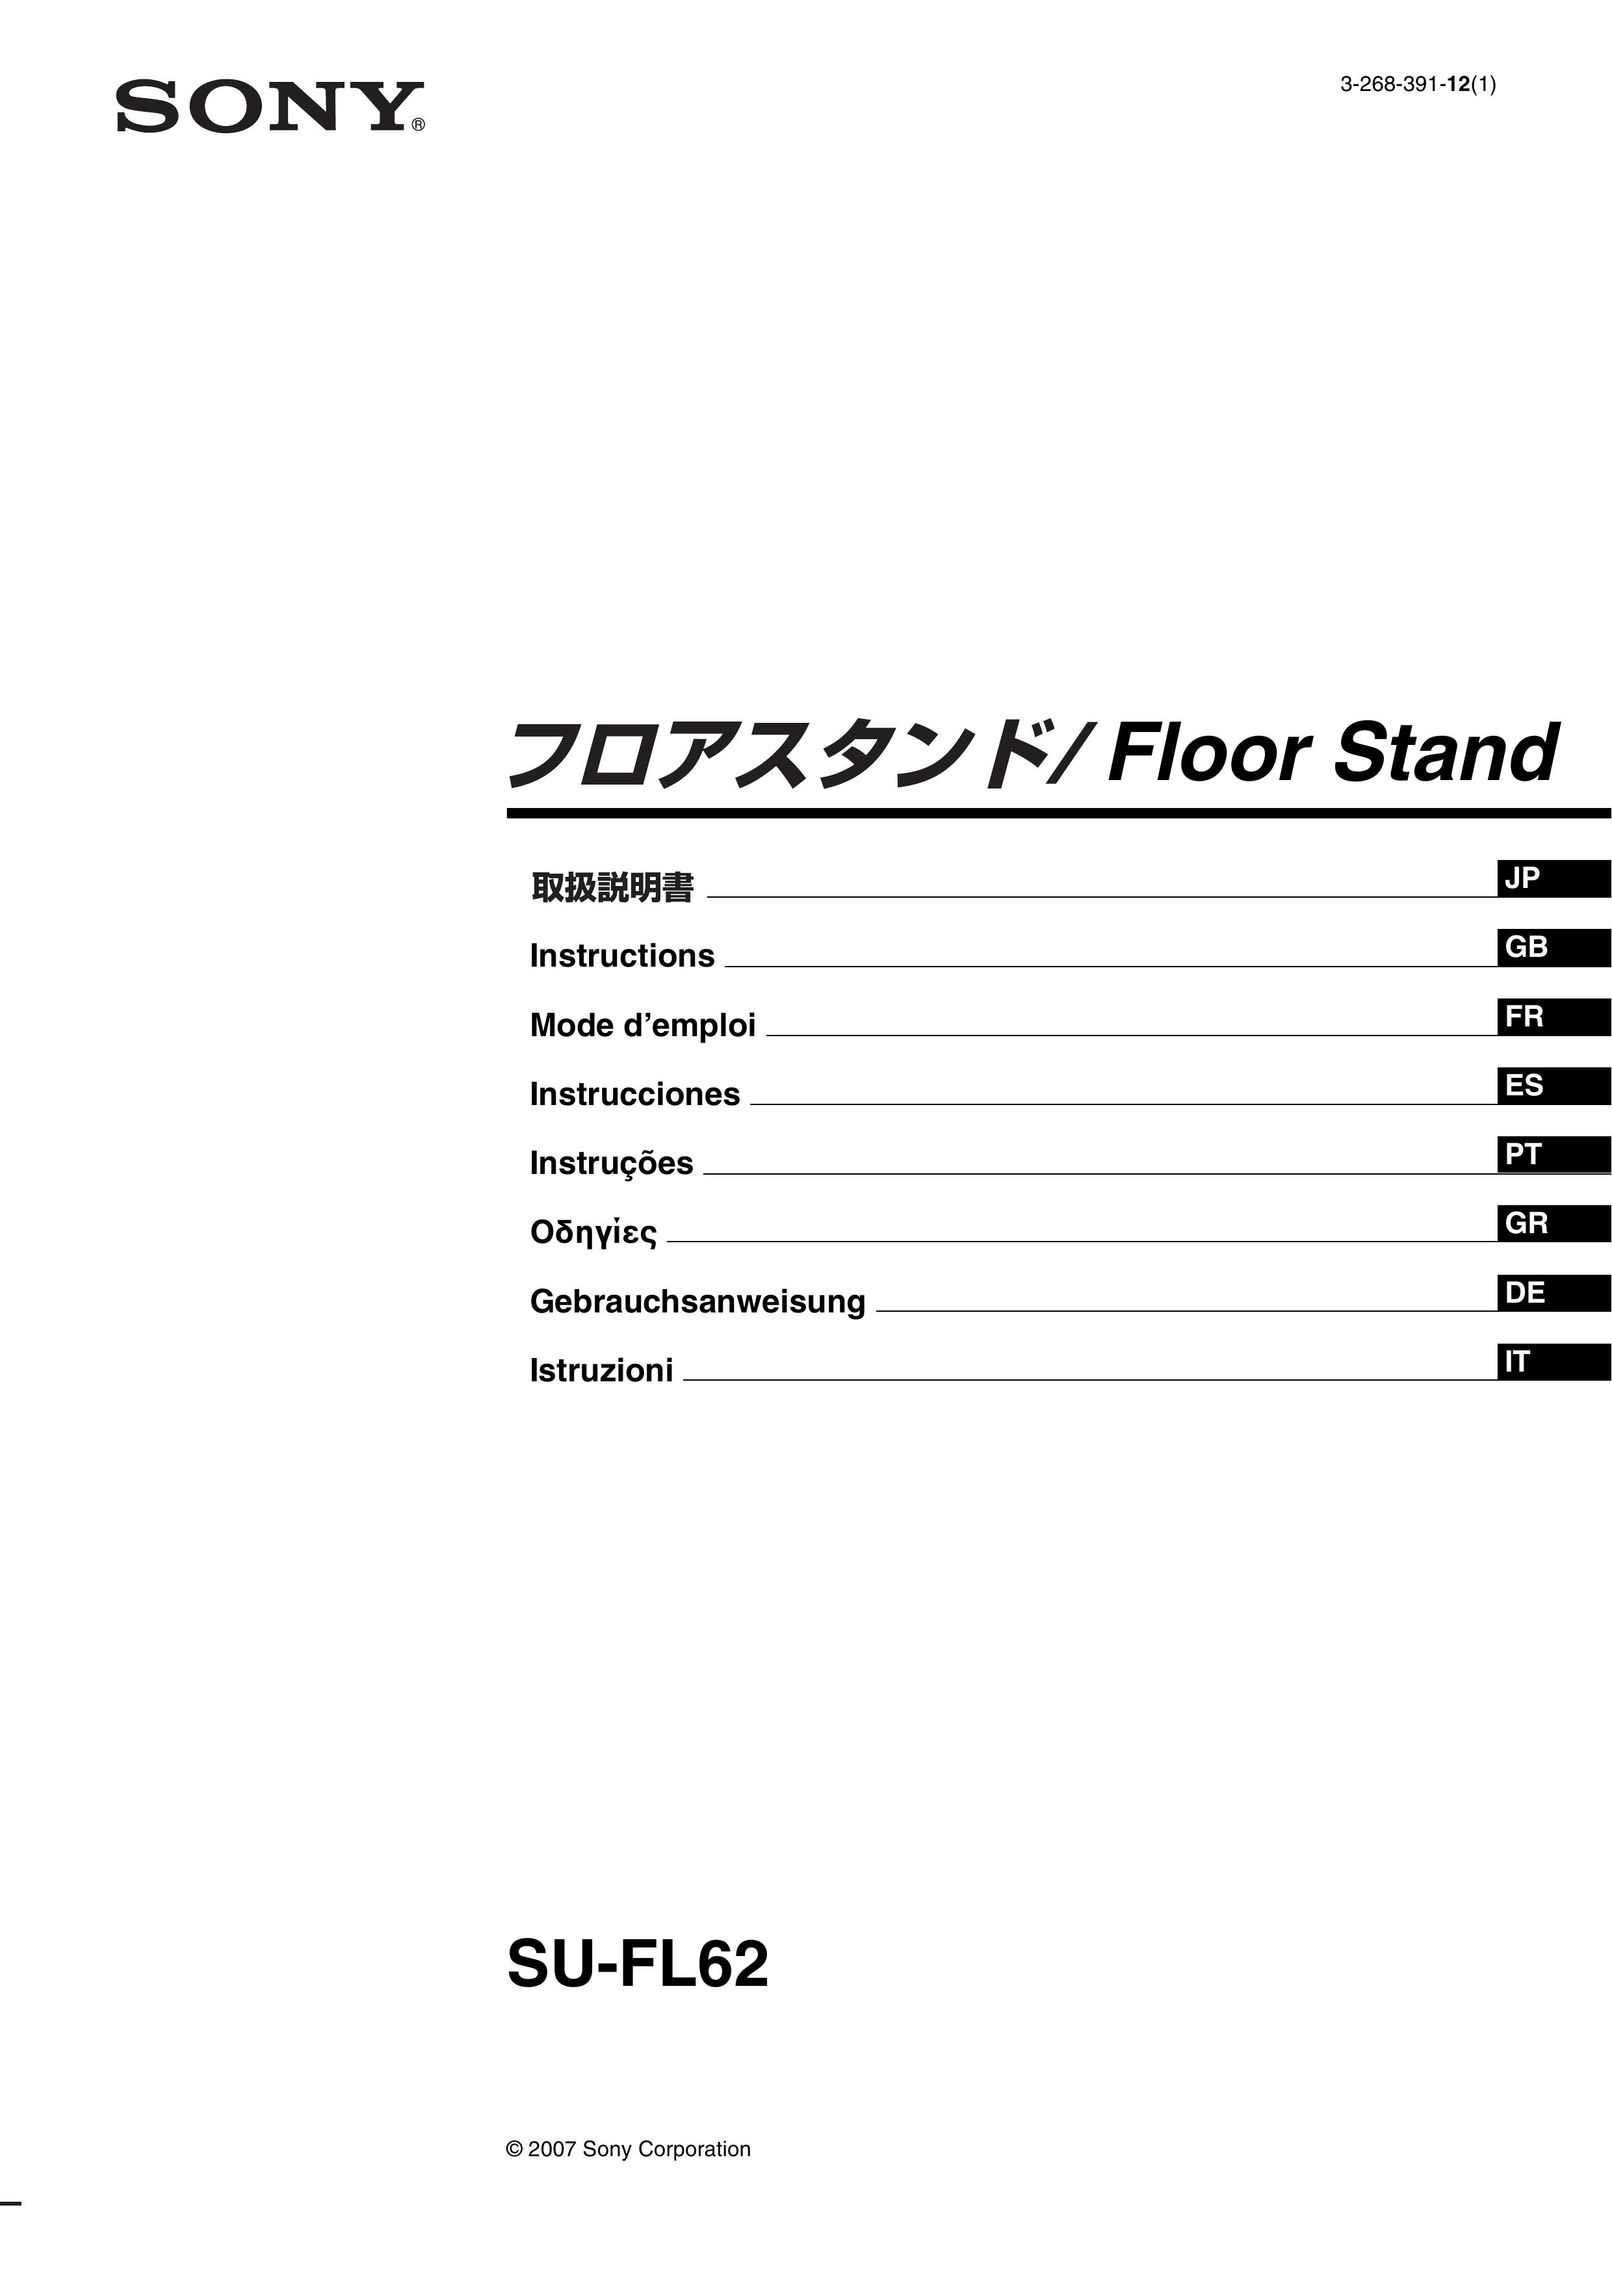 Sony SU-FL62 TV Video Accessories User Manual